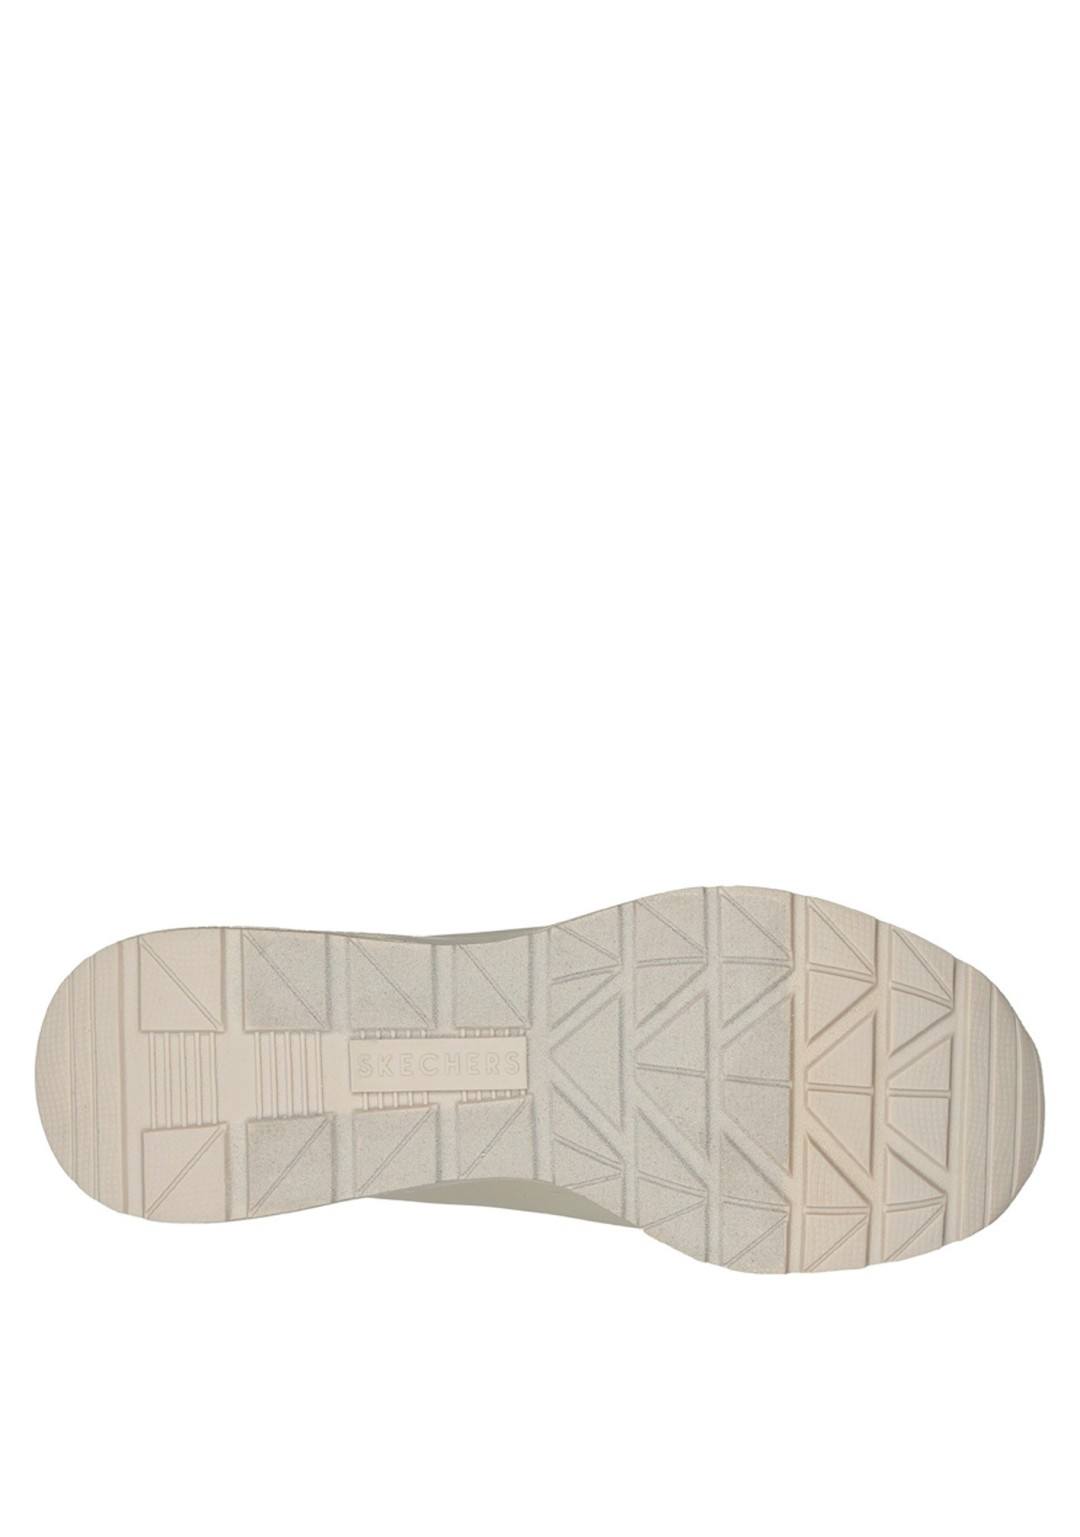 Skechers - Sneaker Air - Donna - 155401/OFWT